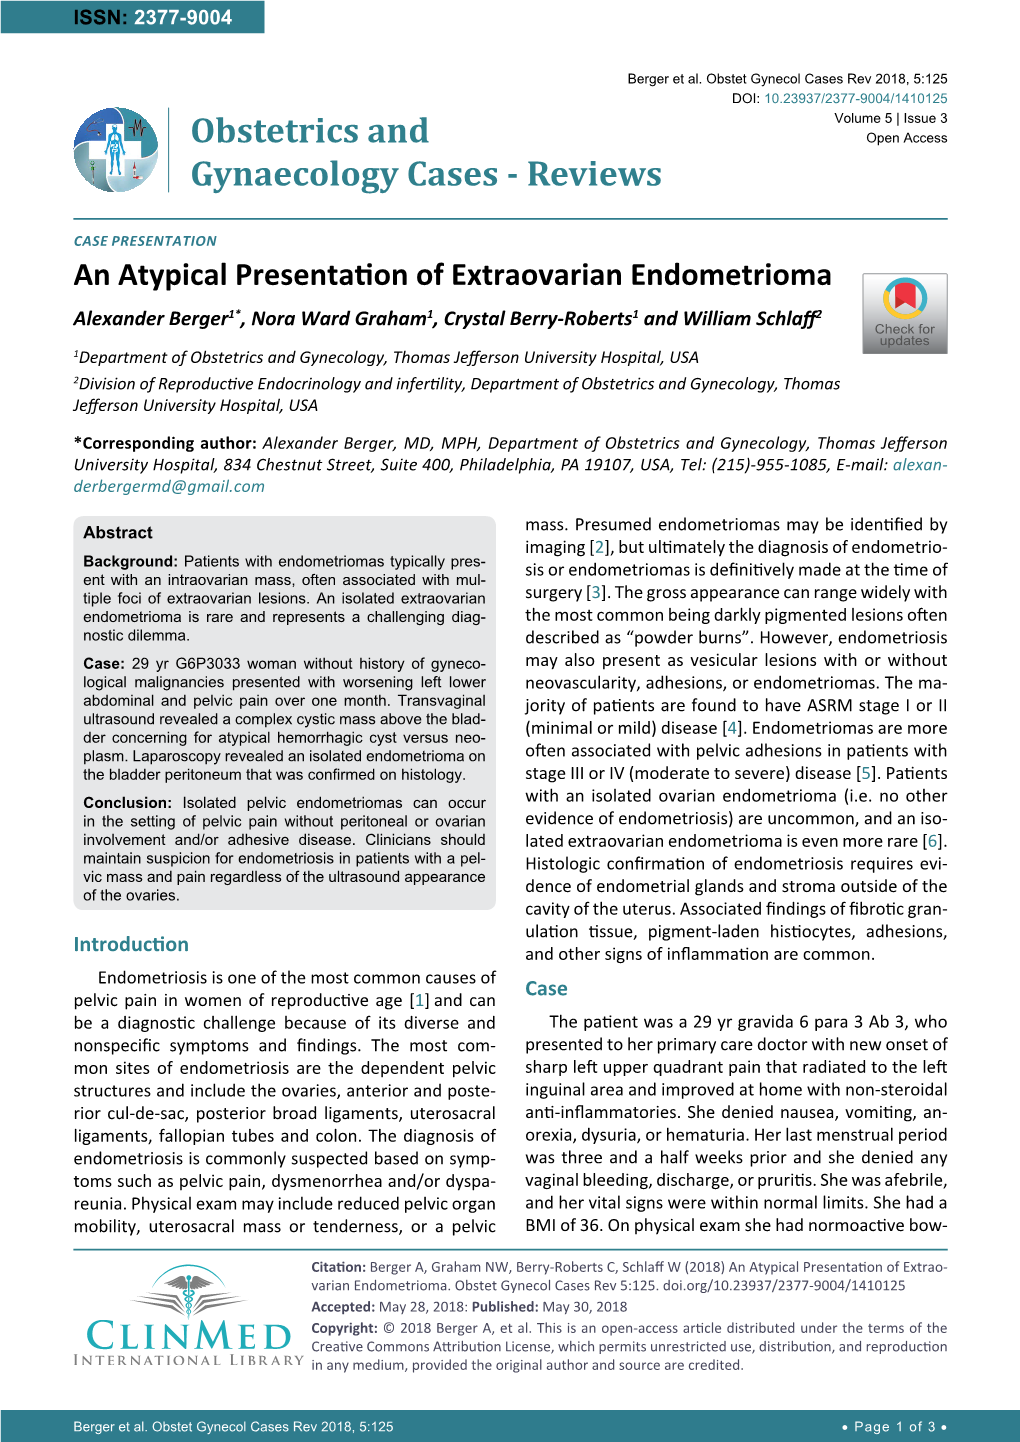 An Atypical Presentation of Extraovarian Endometrioma